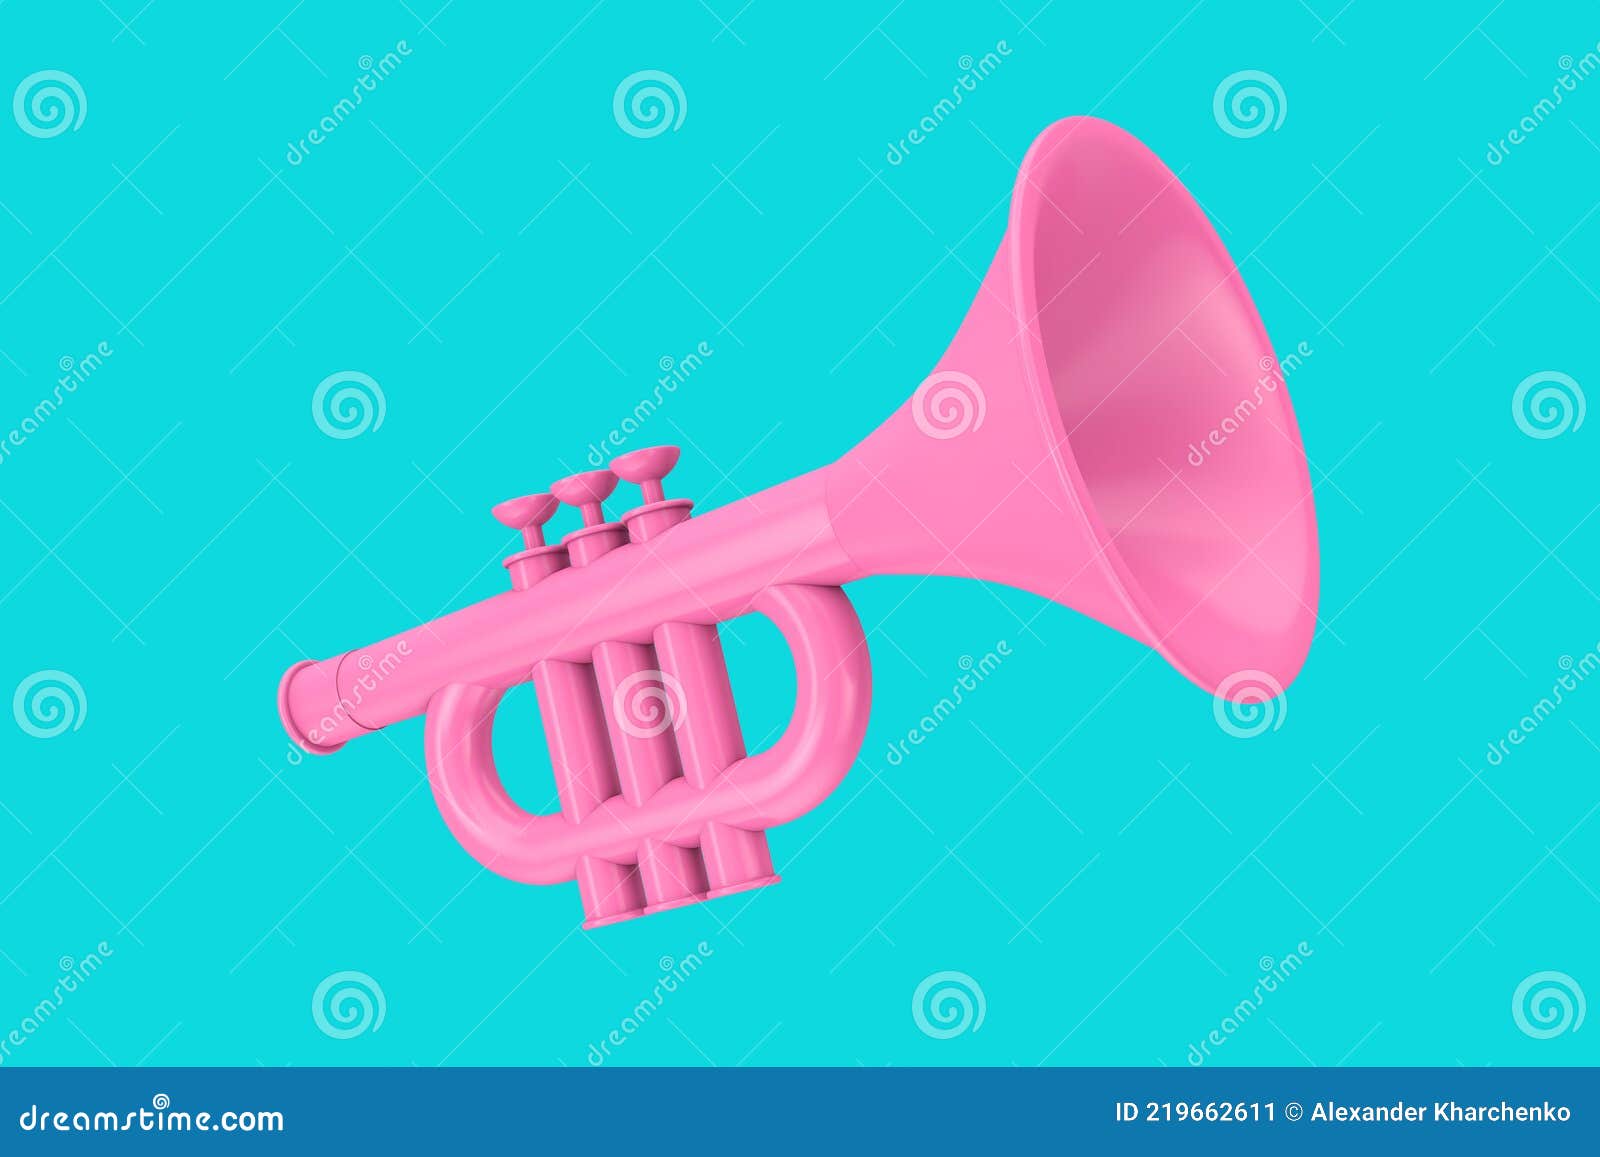 https://thumbs.dreamstime.com/z/trompeta-rosa-de-juguete-para-ni%C3%B1os-en-estilo-duotono-renderizado-d-sobre-un-fondo-azul-219662611.jpg